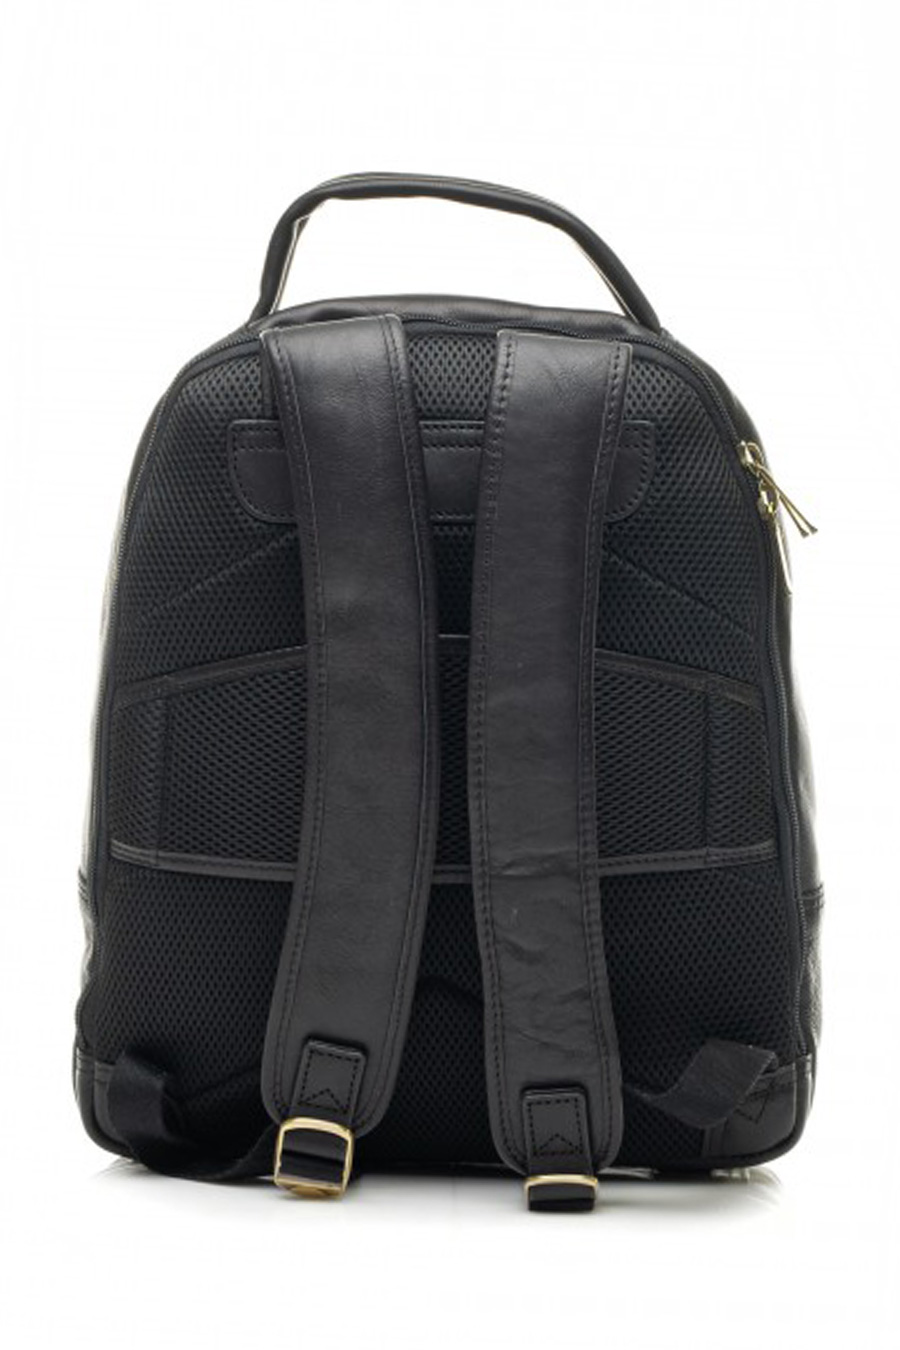 Backpack KATANA 31142-01